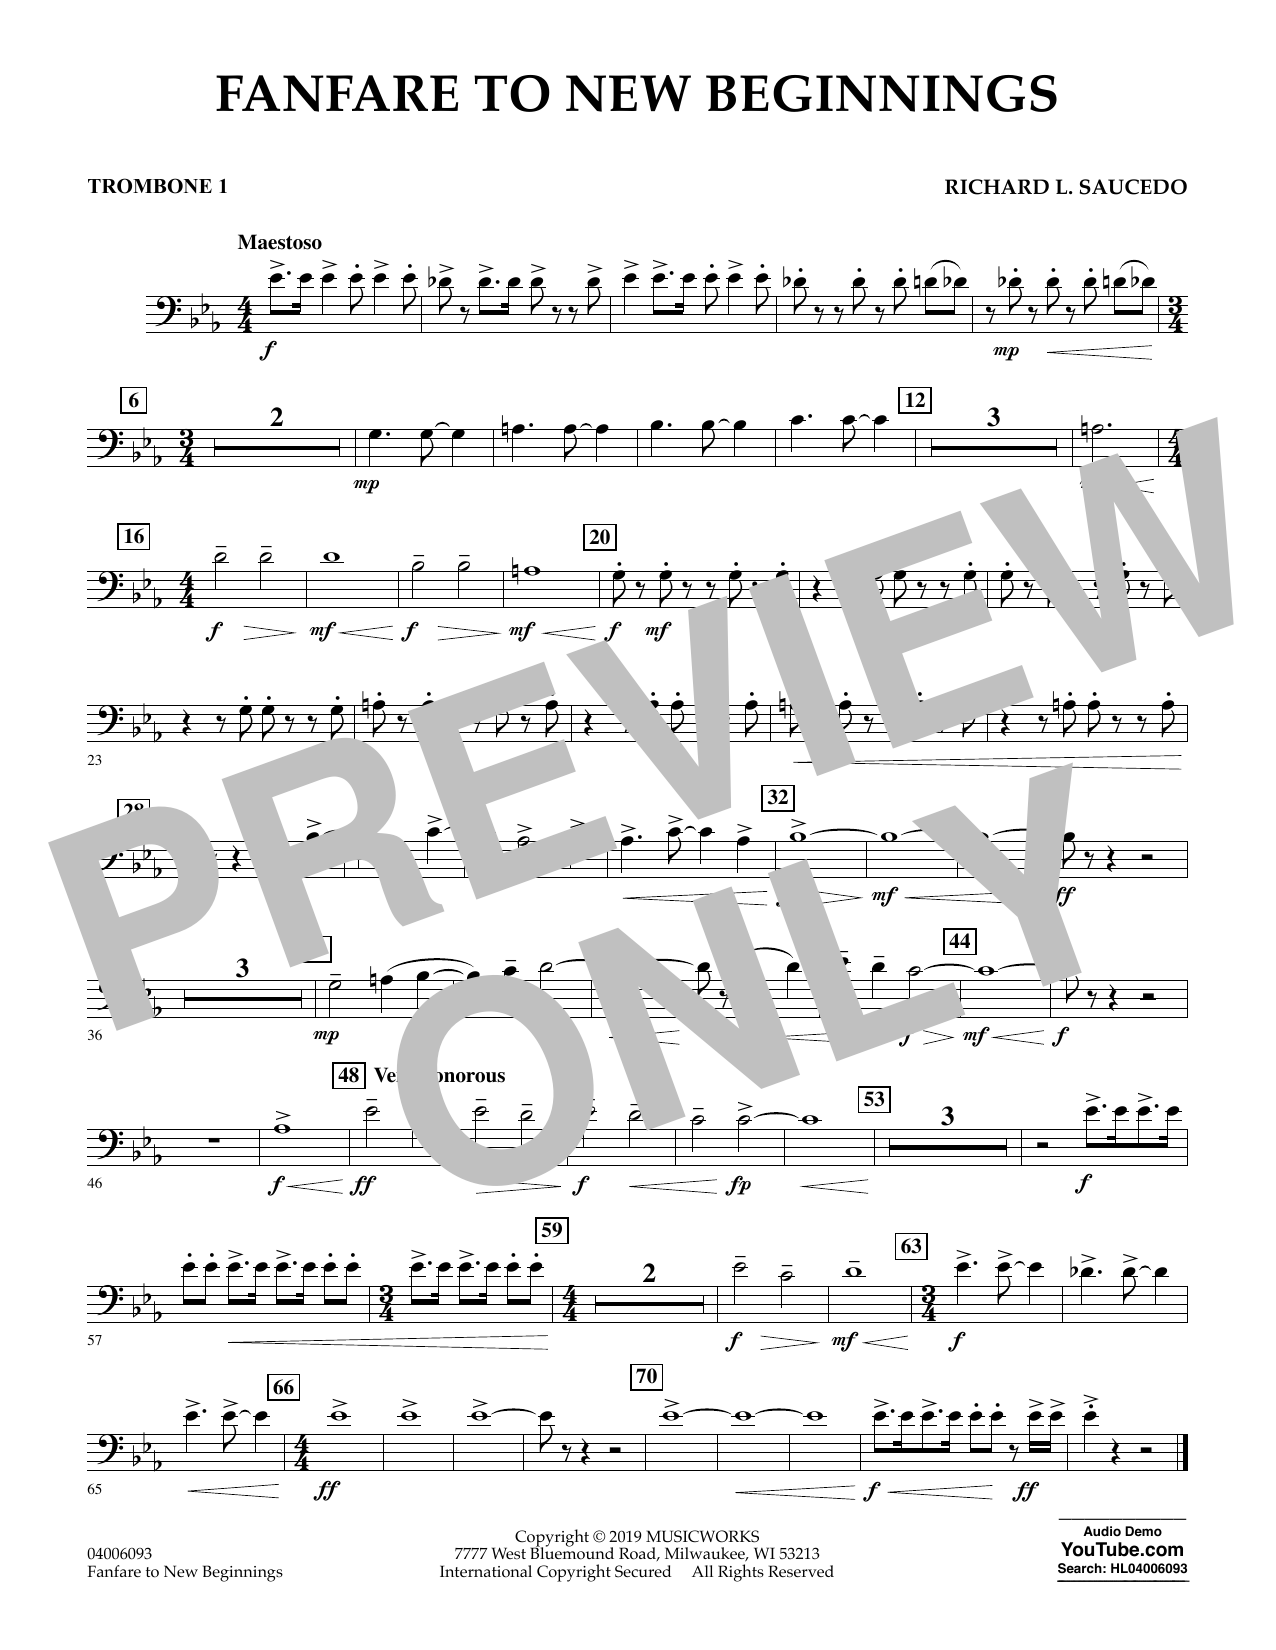 Download Richard L. Saucedo Fanfare for New Beginnings - Trombone 1 Sheet Music